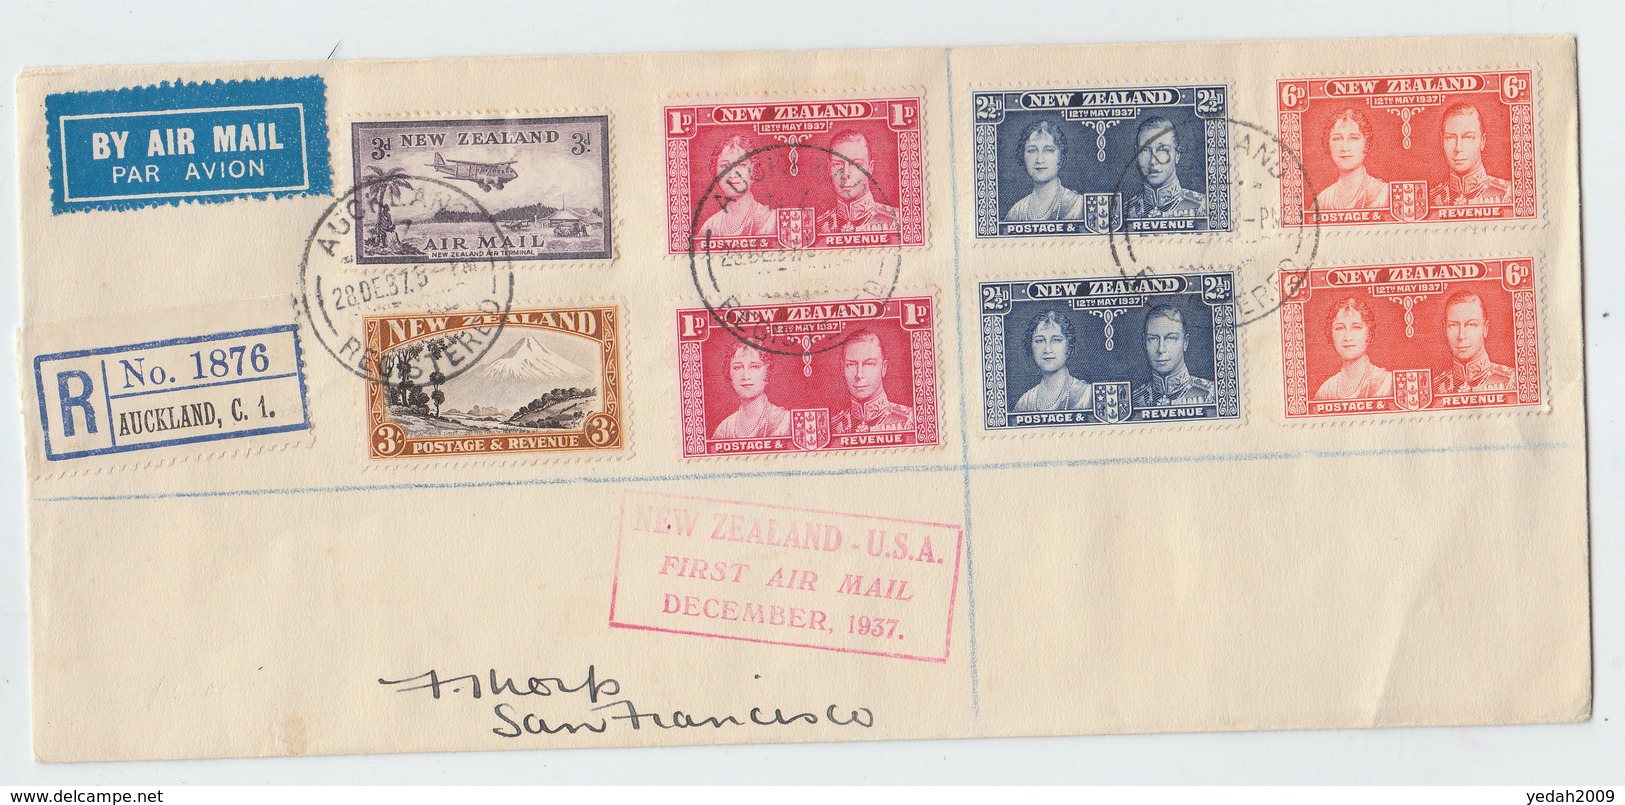 New Zealand/USA FIRST FLIGHT COVER 1937 - Luftpost